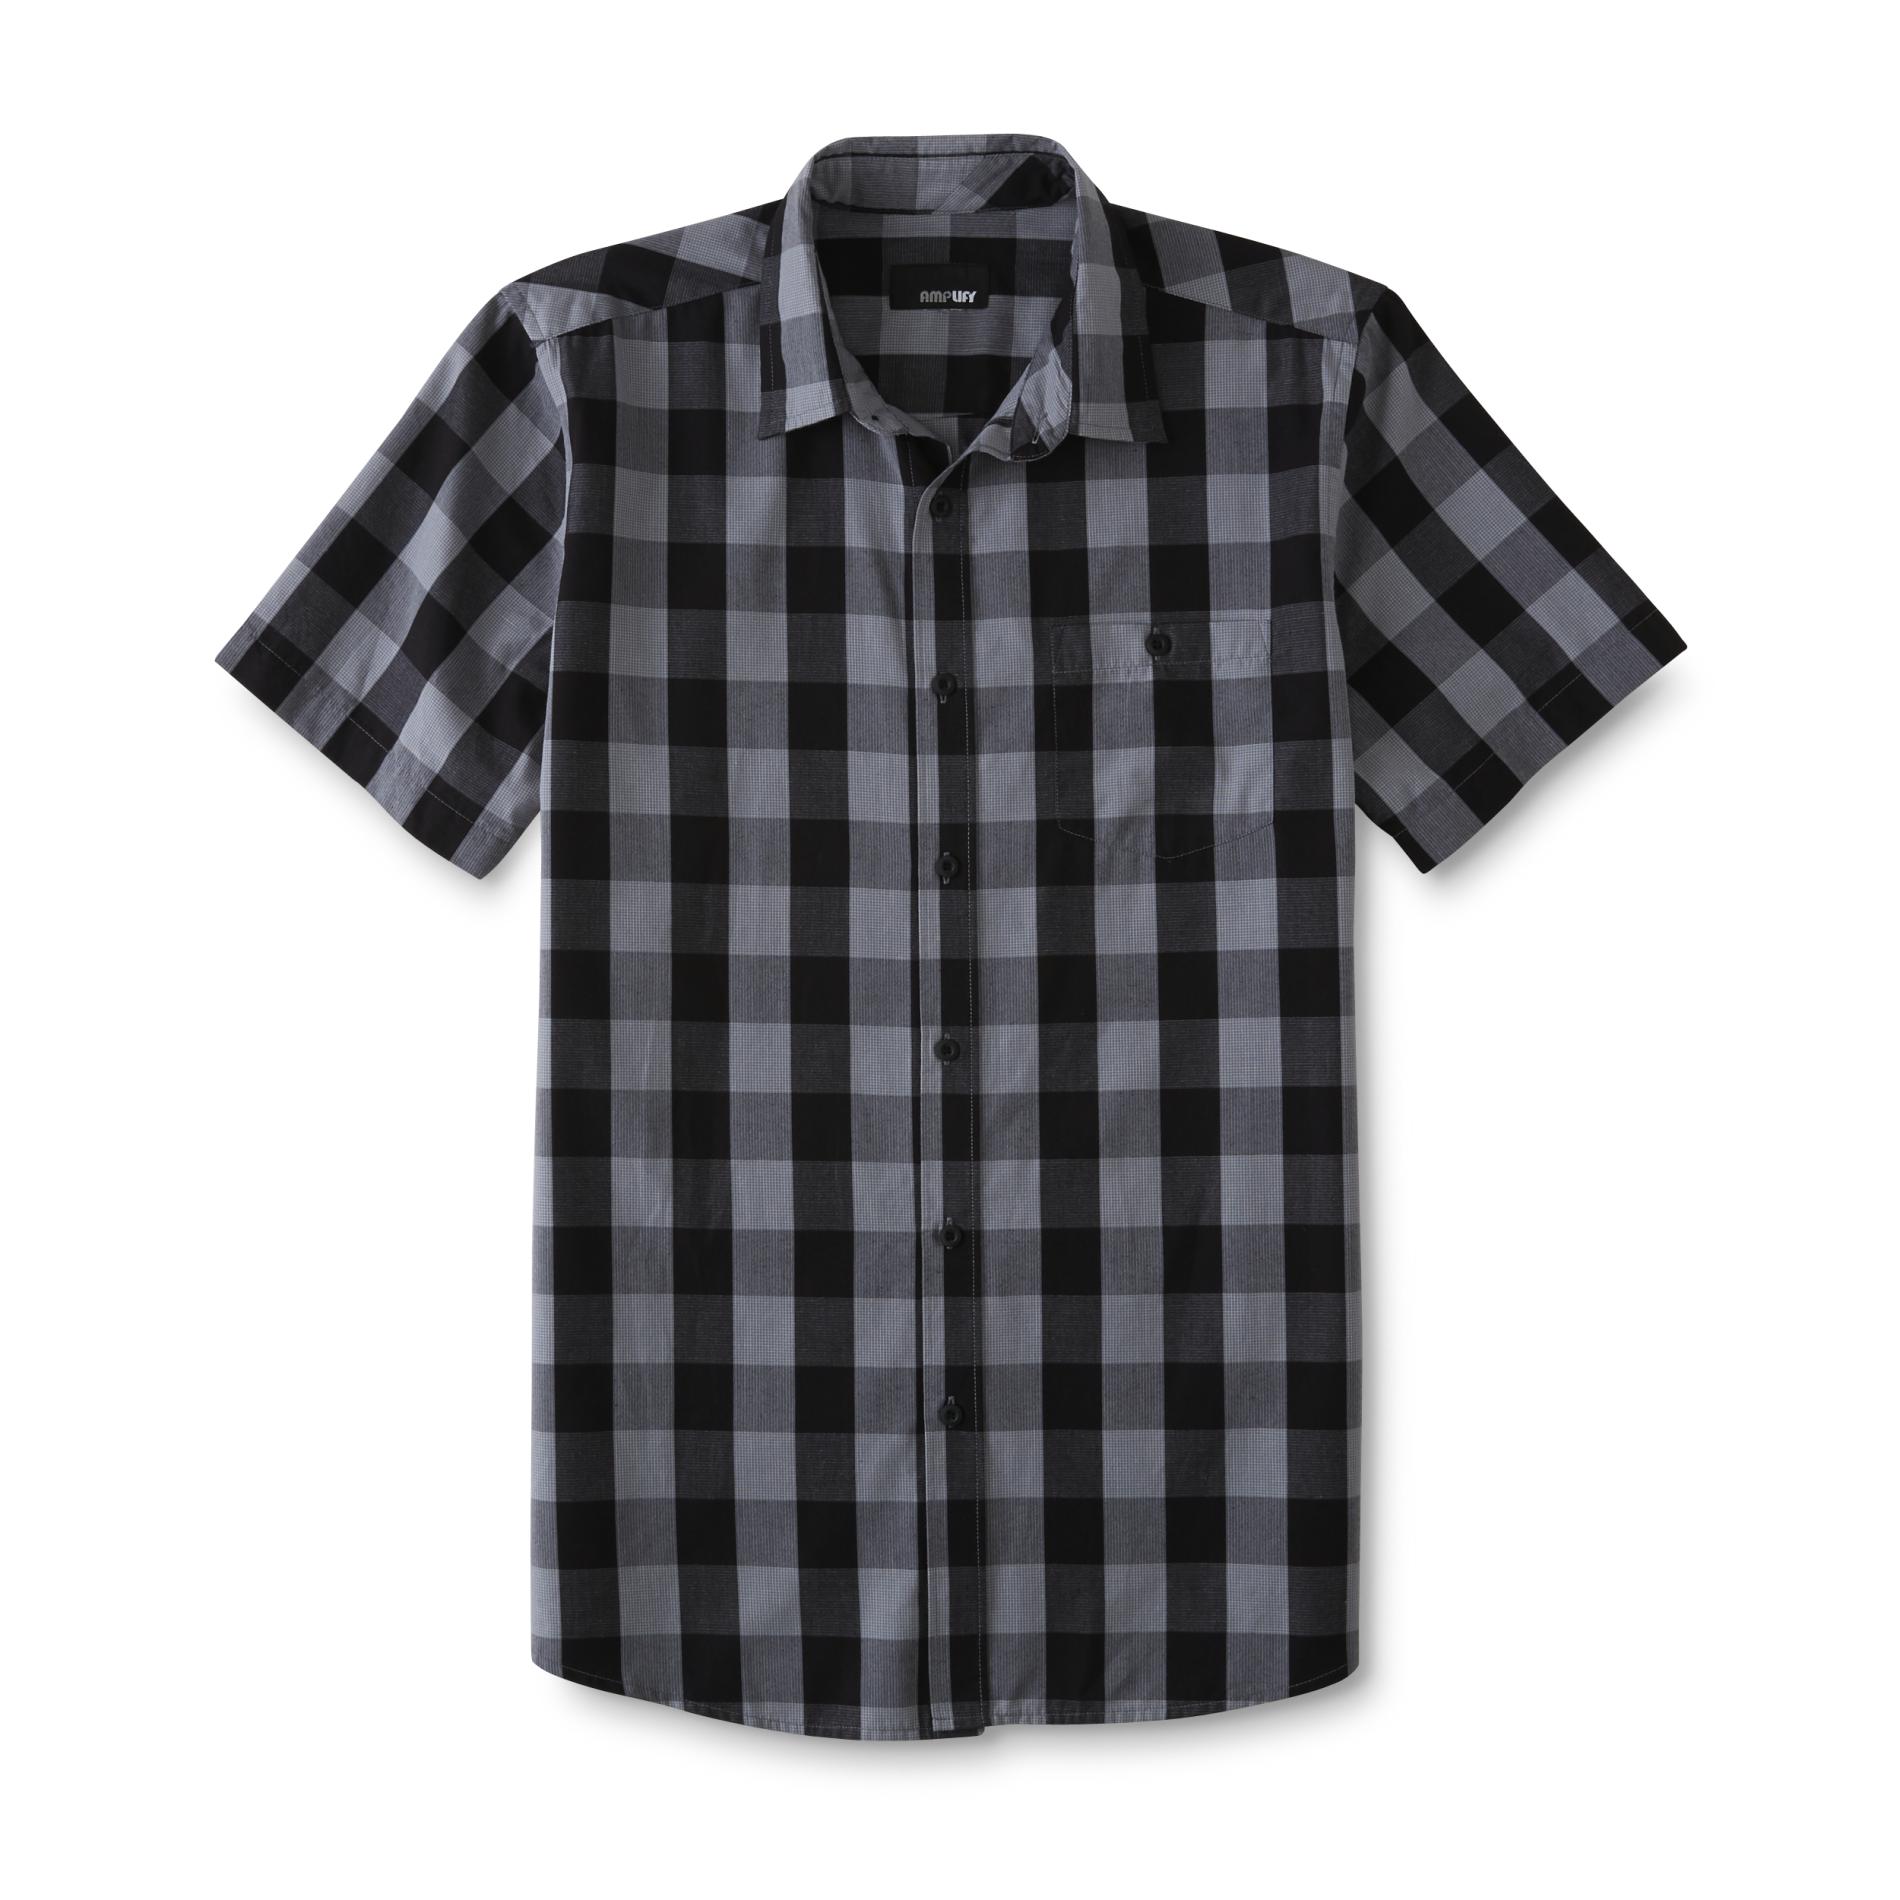 Amplify Young Men's Short-Sleeve Shirt - Checkered